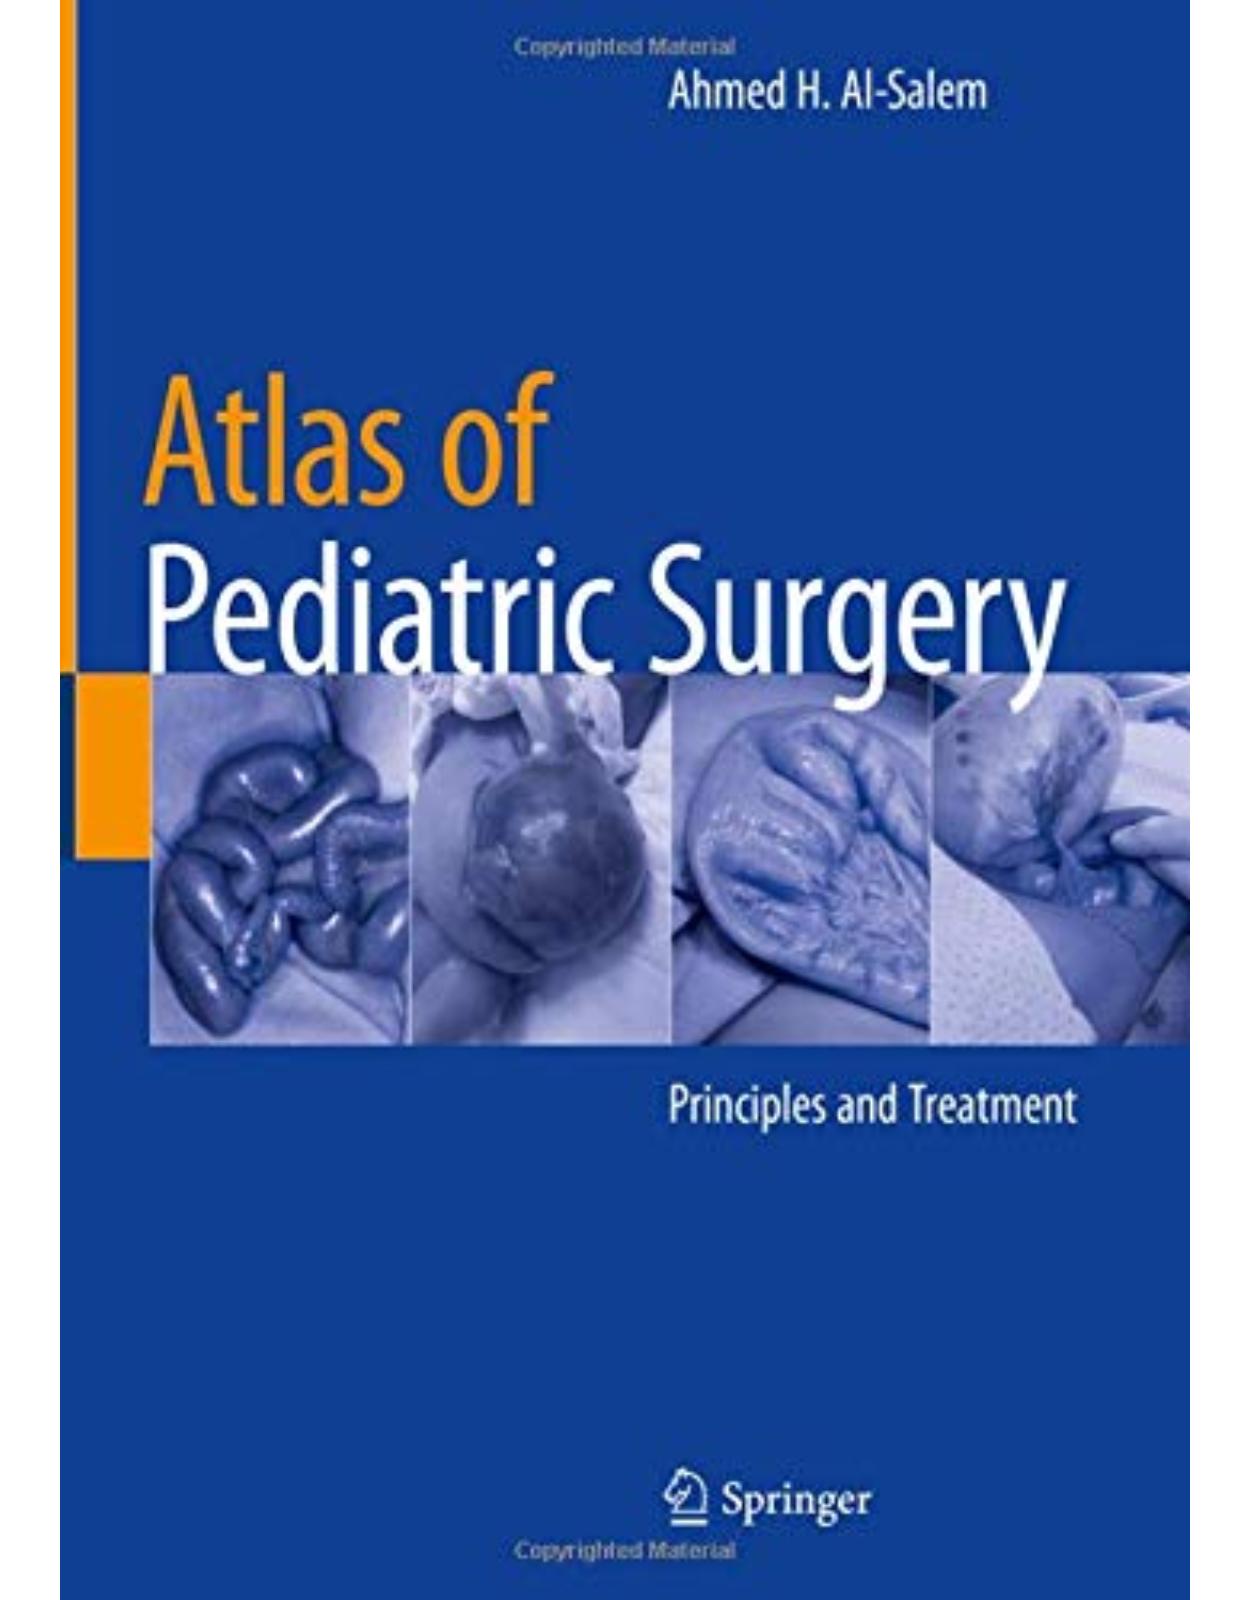 Atlas of Pediatric Surgery: Principles and Treatment 